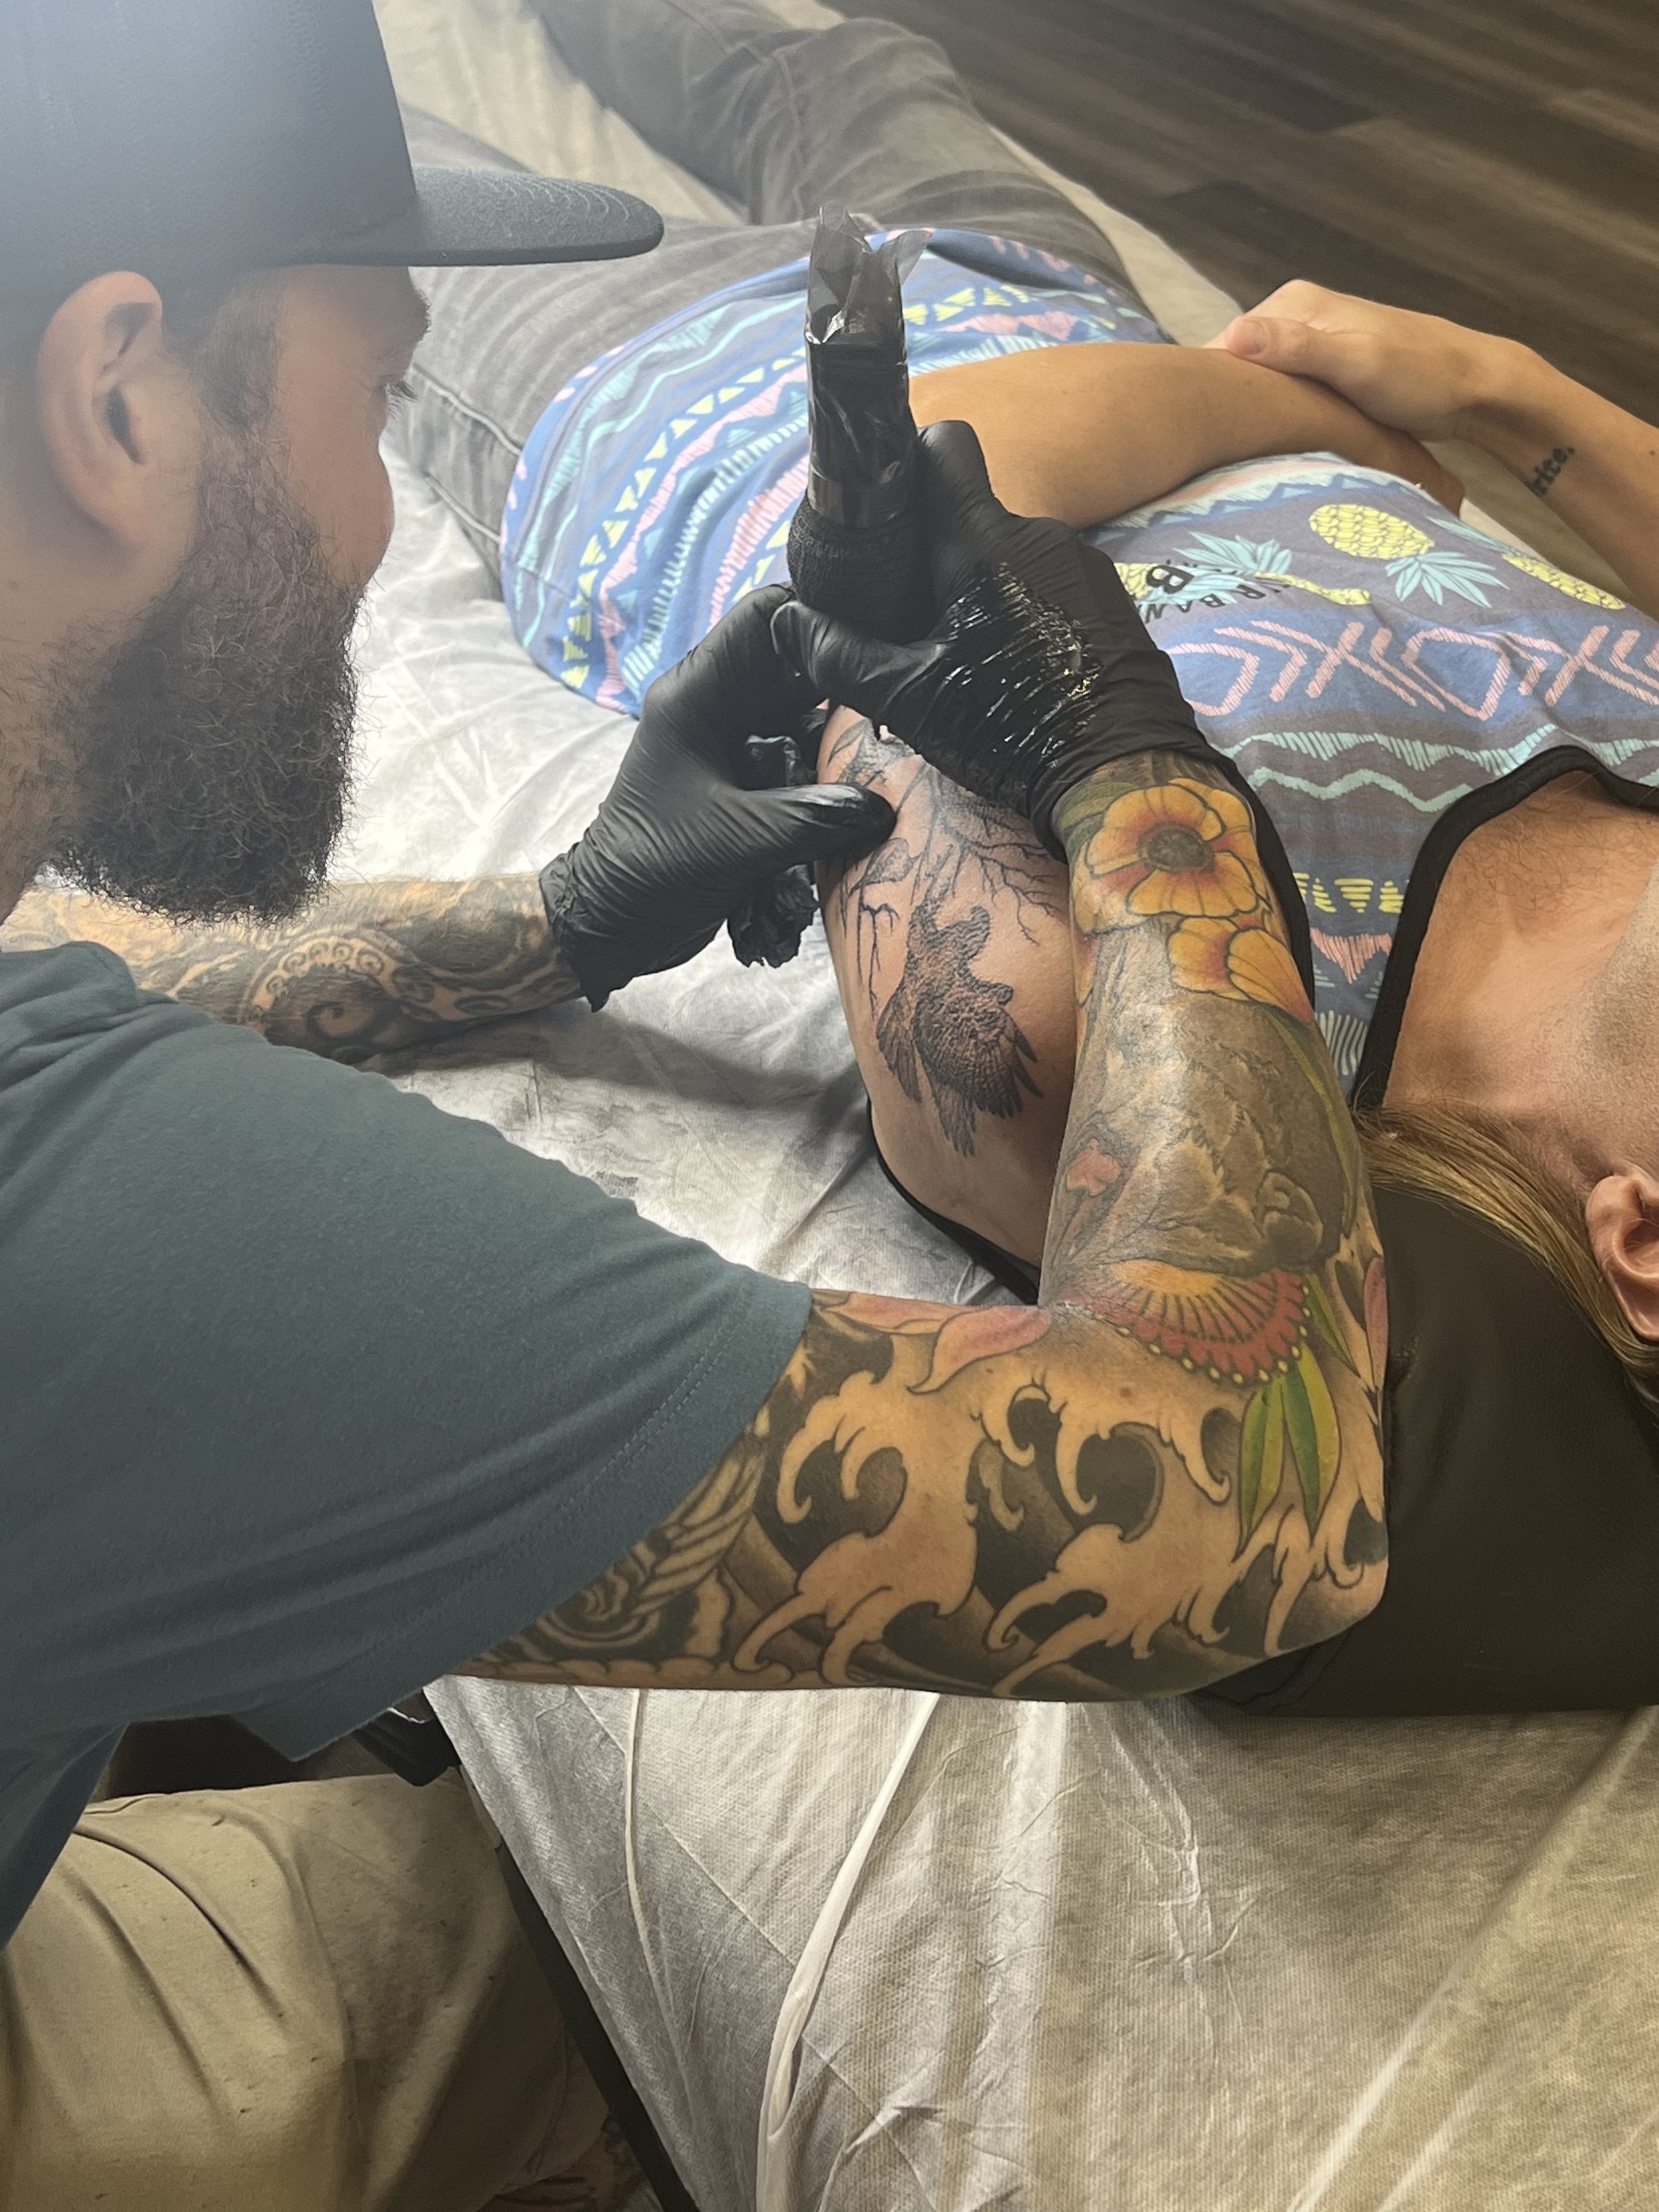 Horiyoshi III Talks to VICE About Full Body Tattoos | Hypebeast